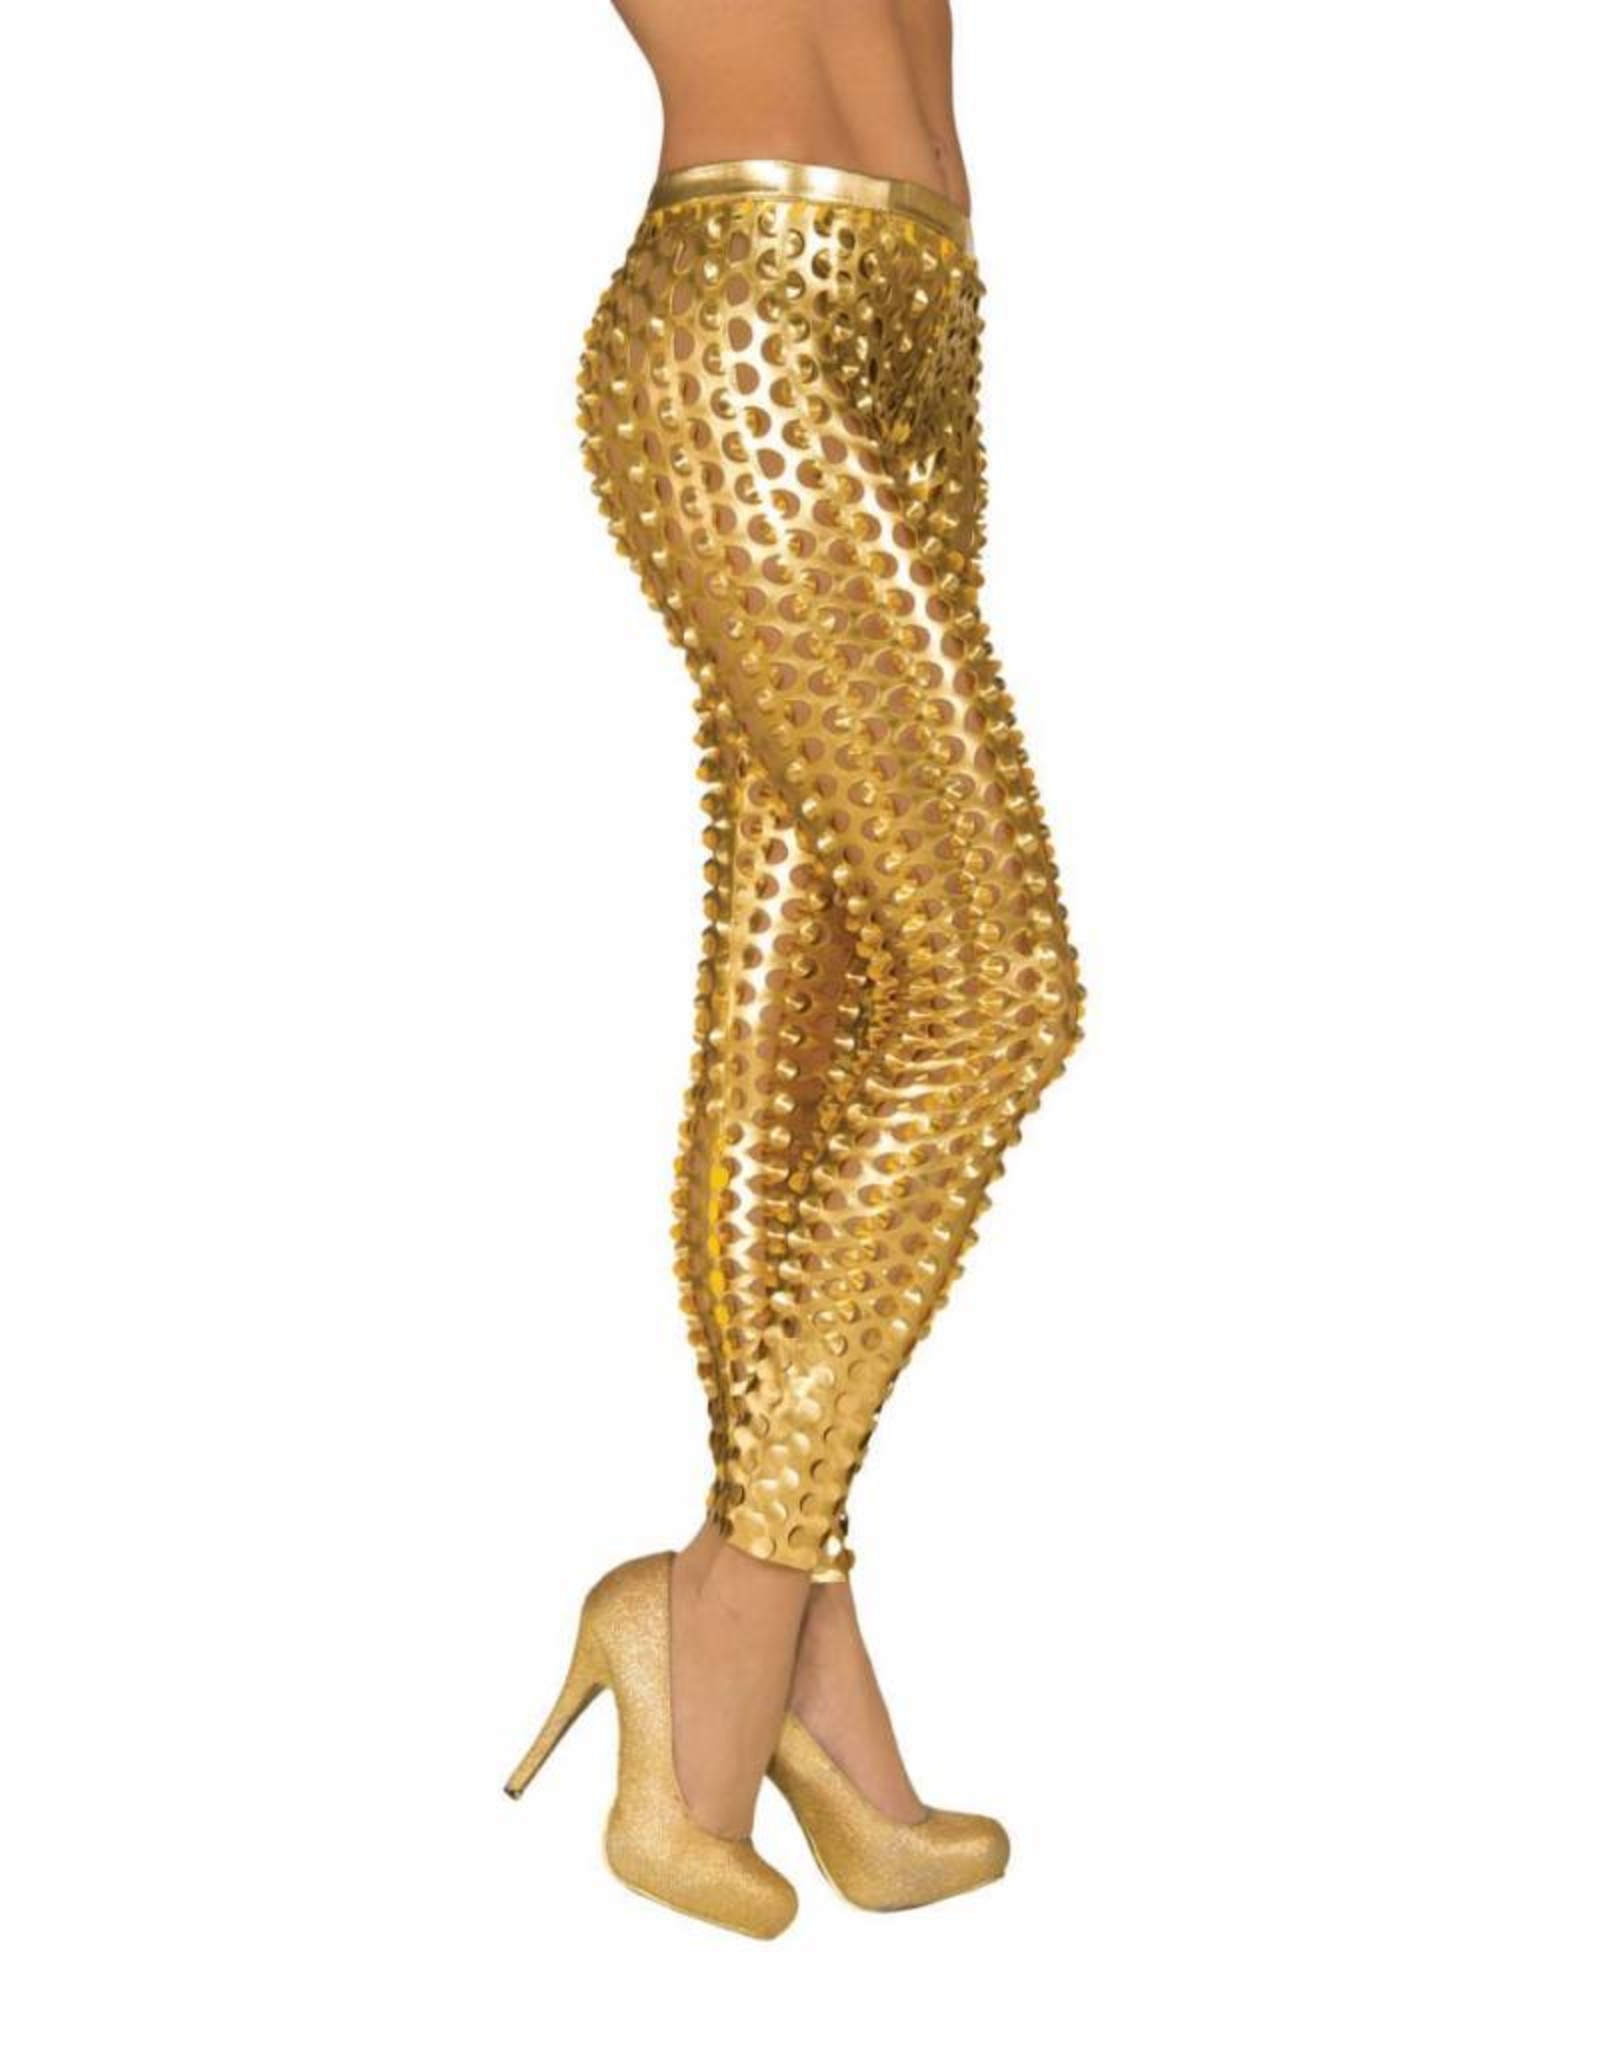 https://cdn.shoplightspeed.com/shops/623990/files/12302638/1600x2048x2/secret-wishes-discontinued-gold-pop-star-leggings.jpg